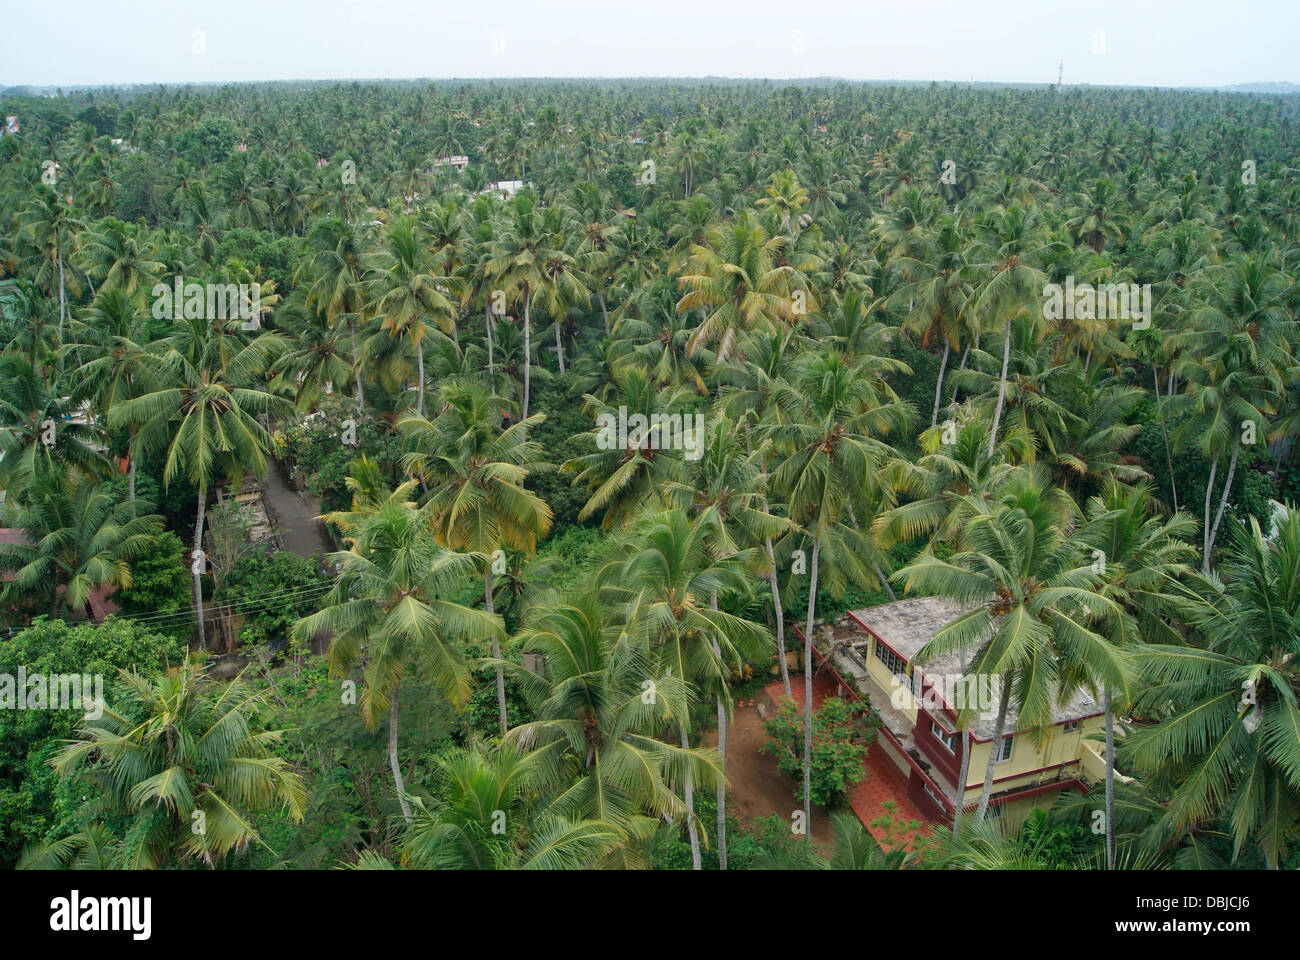 Kerala das Hause Land der Kokosnuss Bäumen Luftbild Landschaft Indien Stockfoto